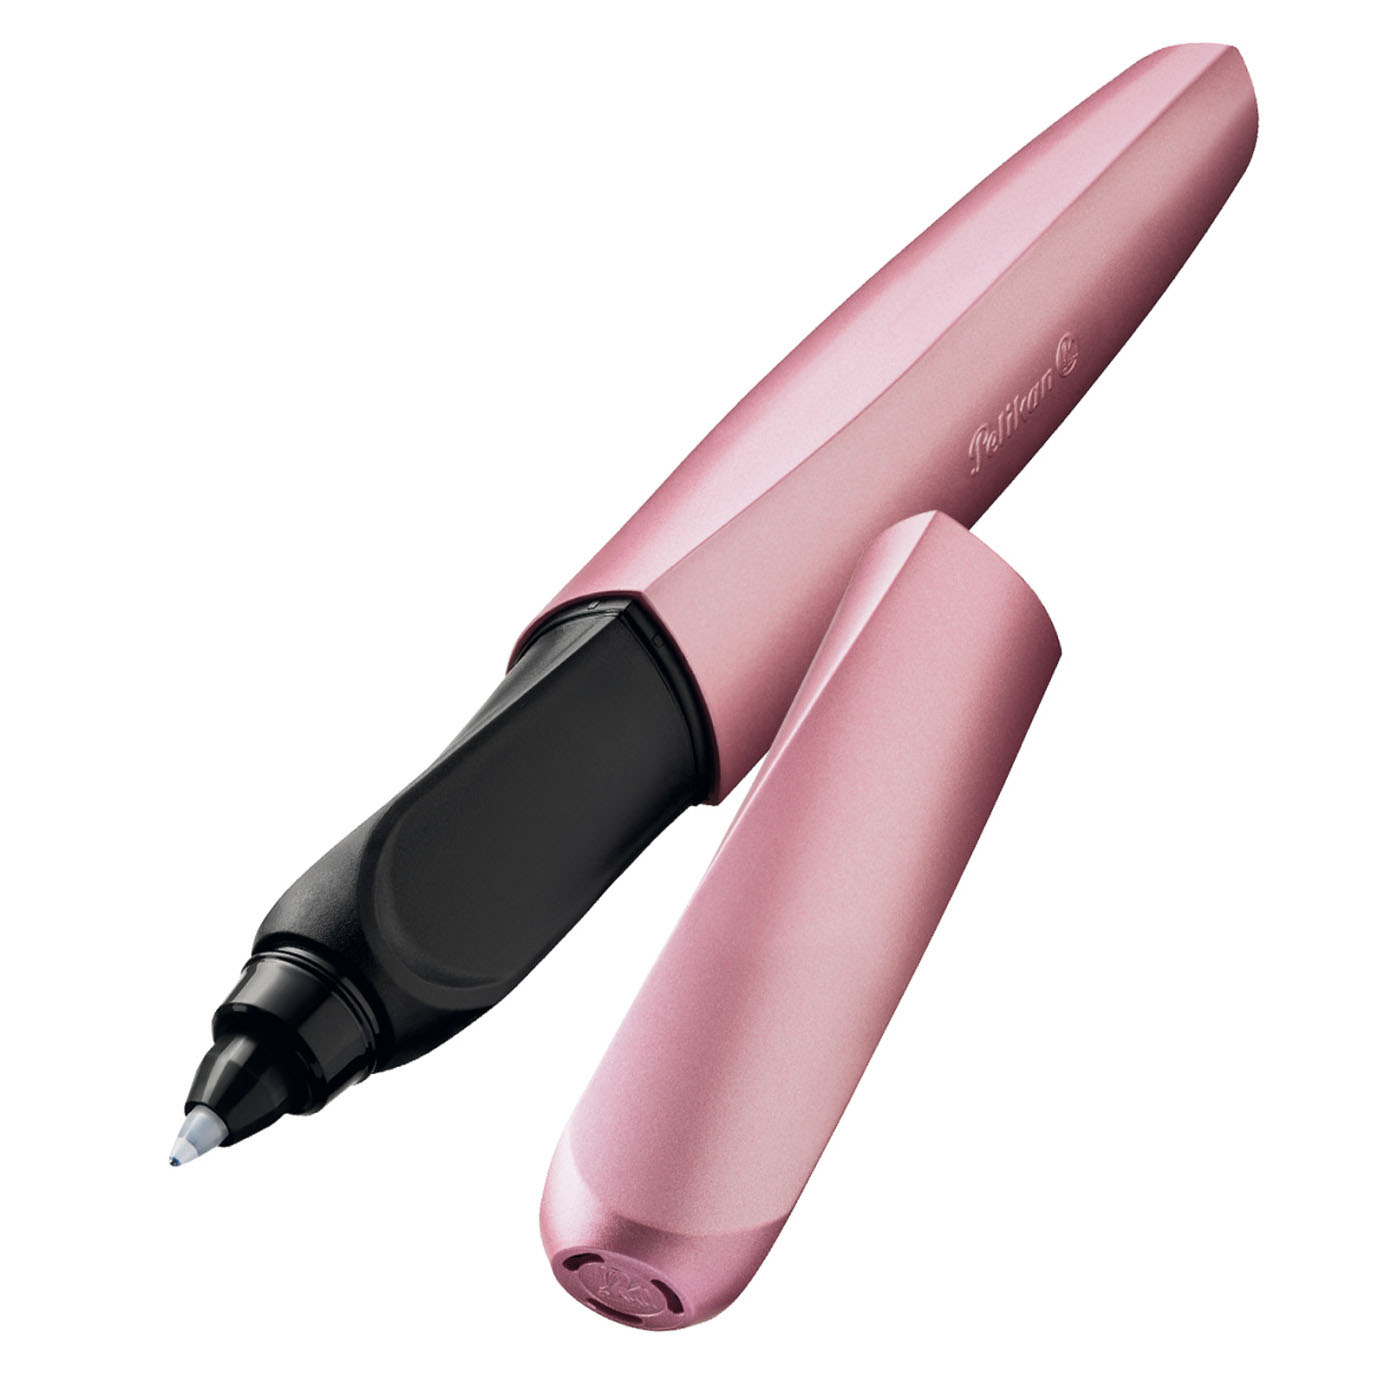 Pelikan Twist Tintenroller Girly Rose, rosa-metallic